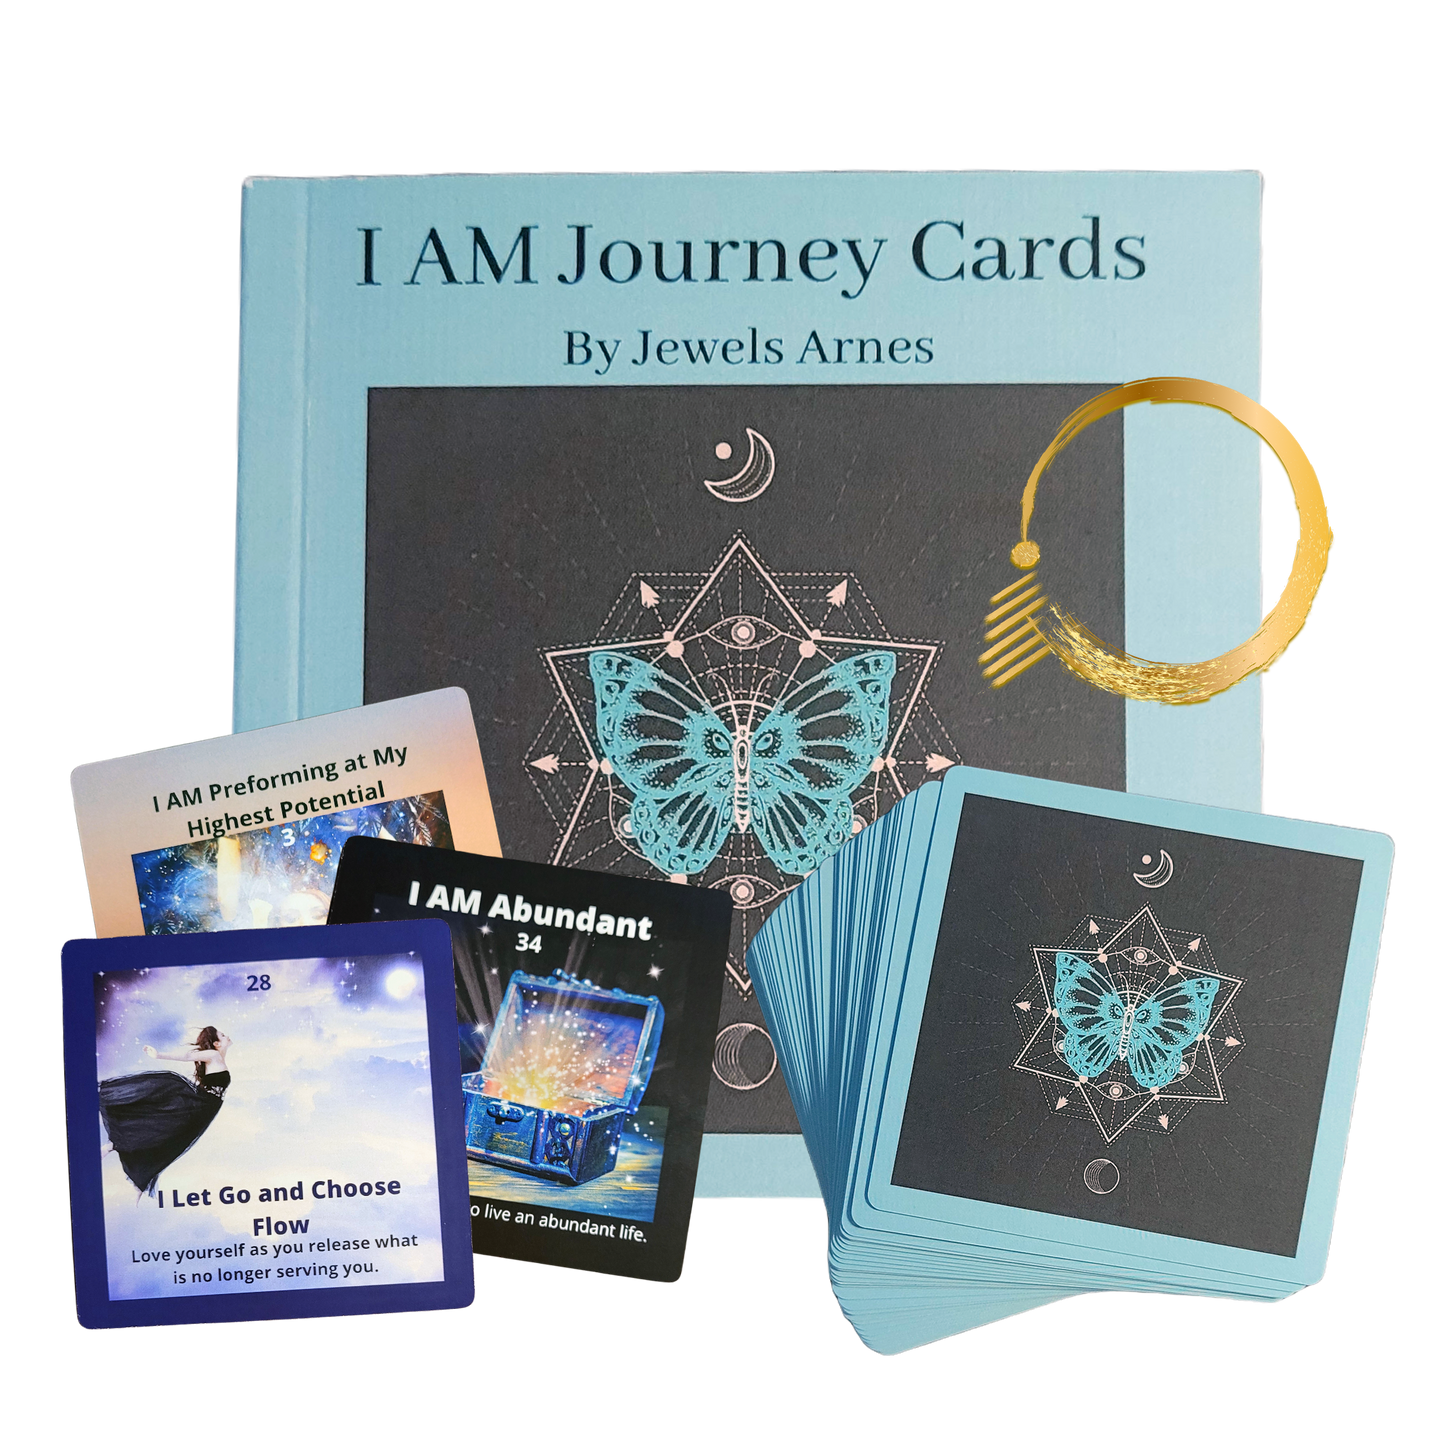 I AM Journey Cards